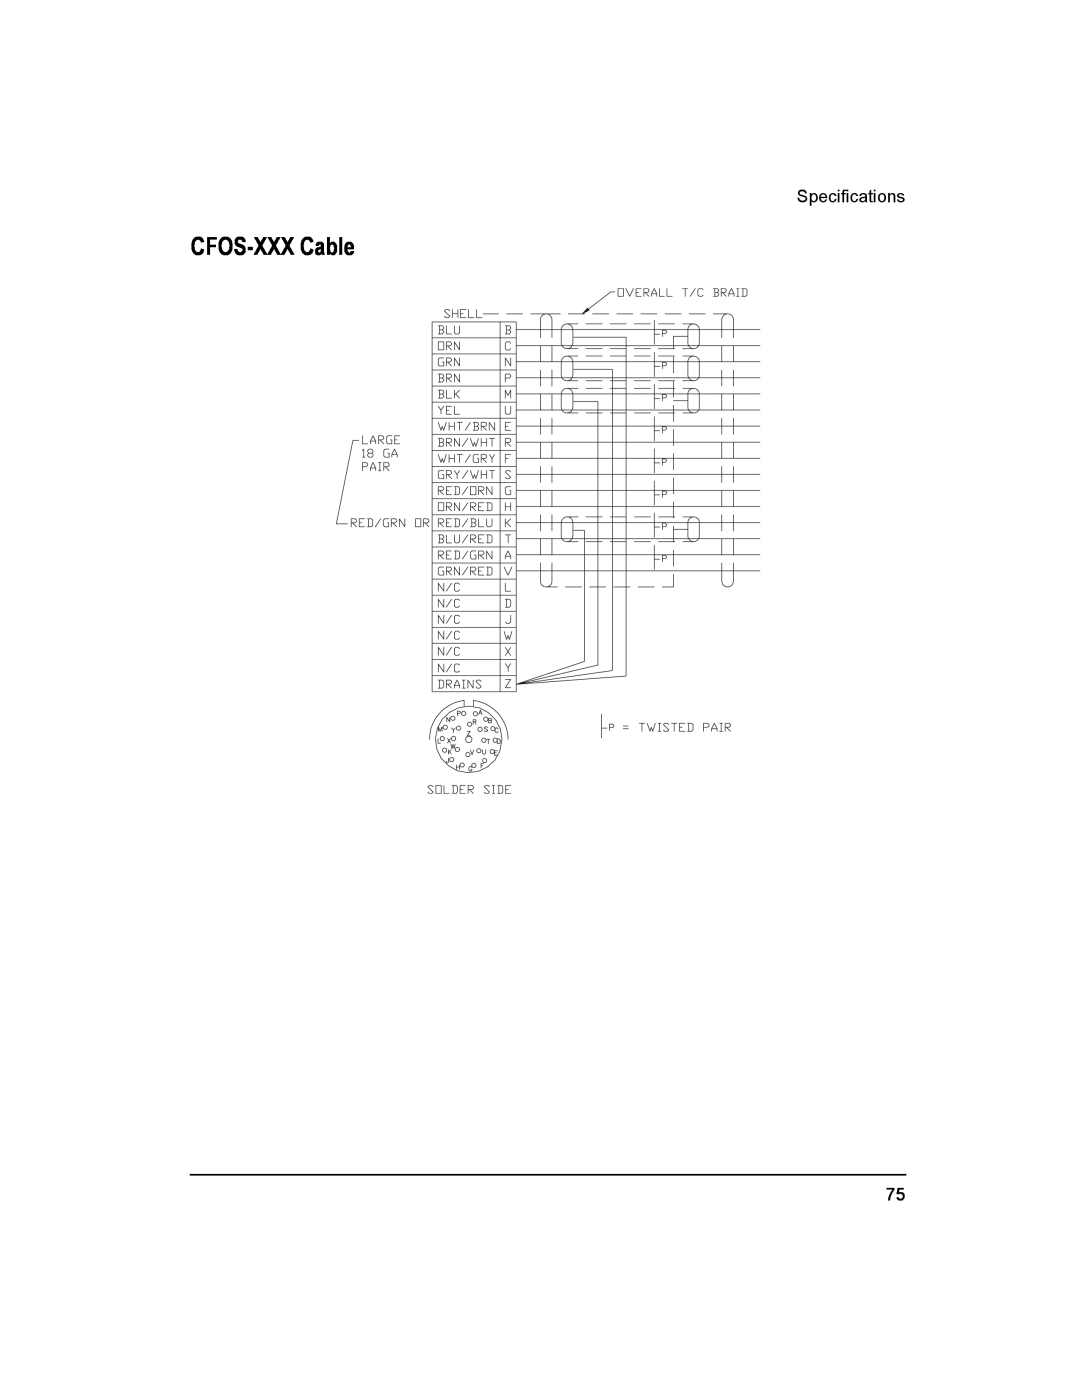 Emerson Epsilon Eb Digital Servo Drive, 400501-05 installation manual CFOS-XXX Cable, Specifications 